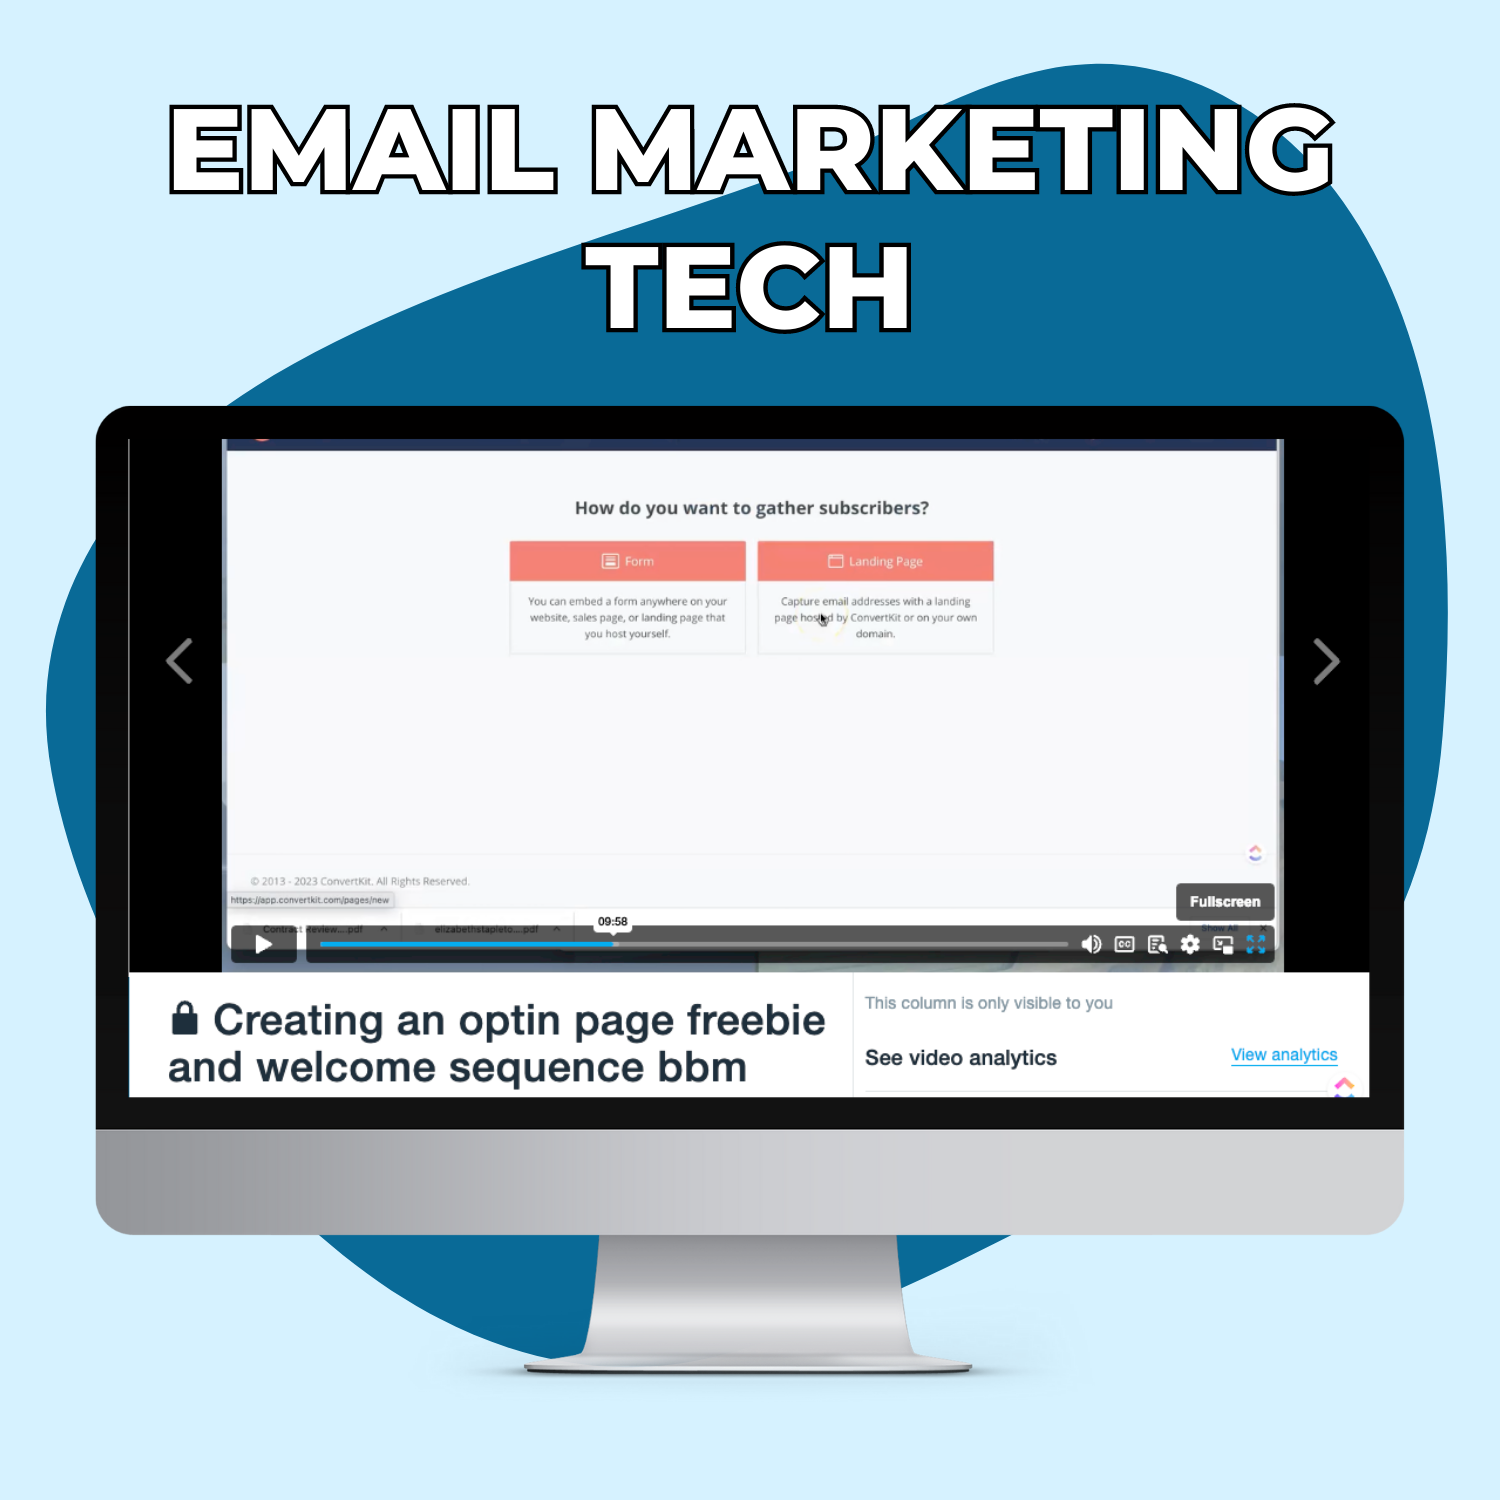 Email Marketing Tech Vault